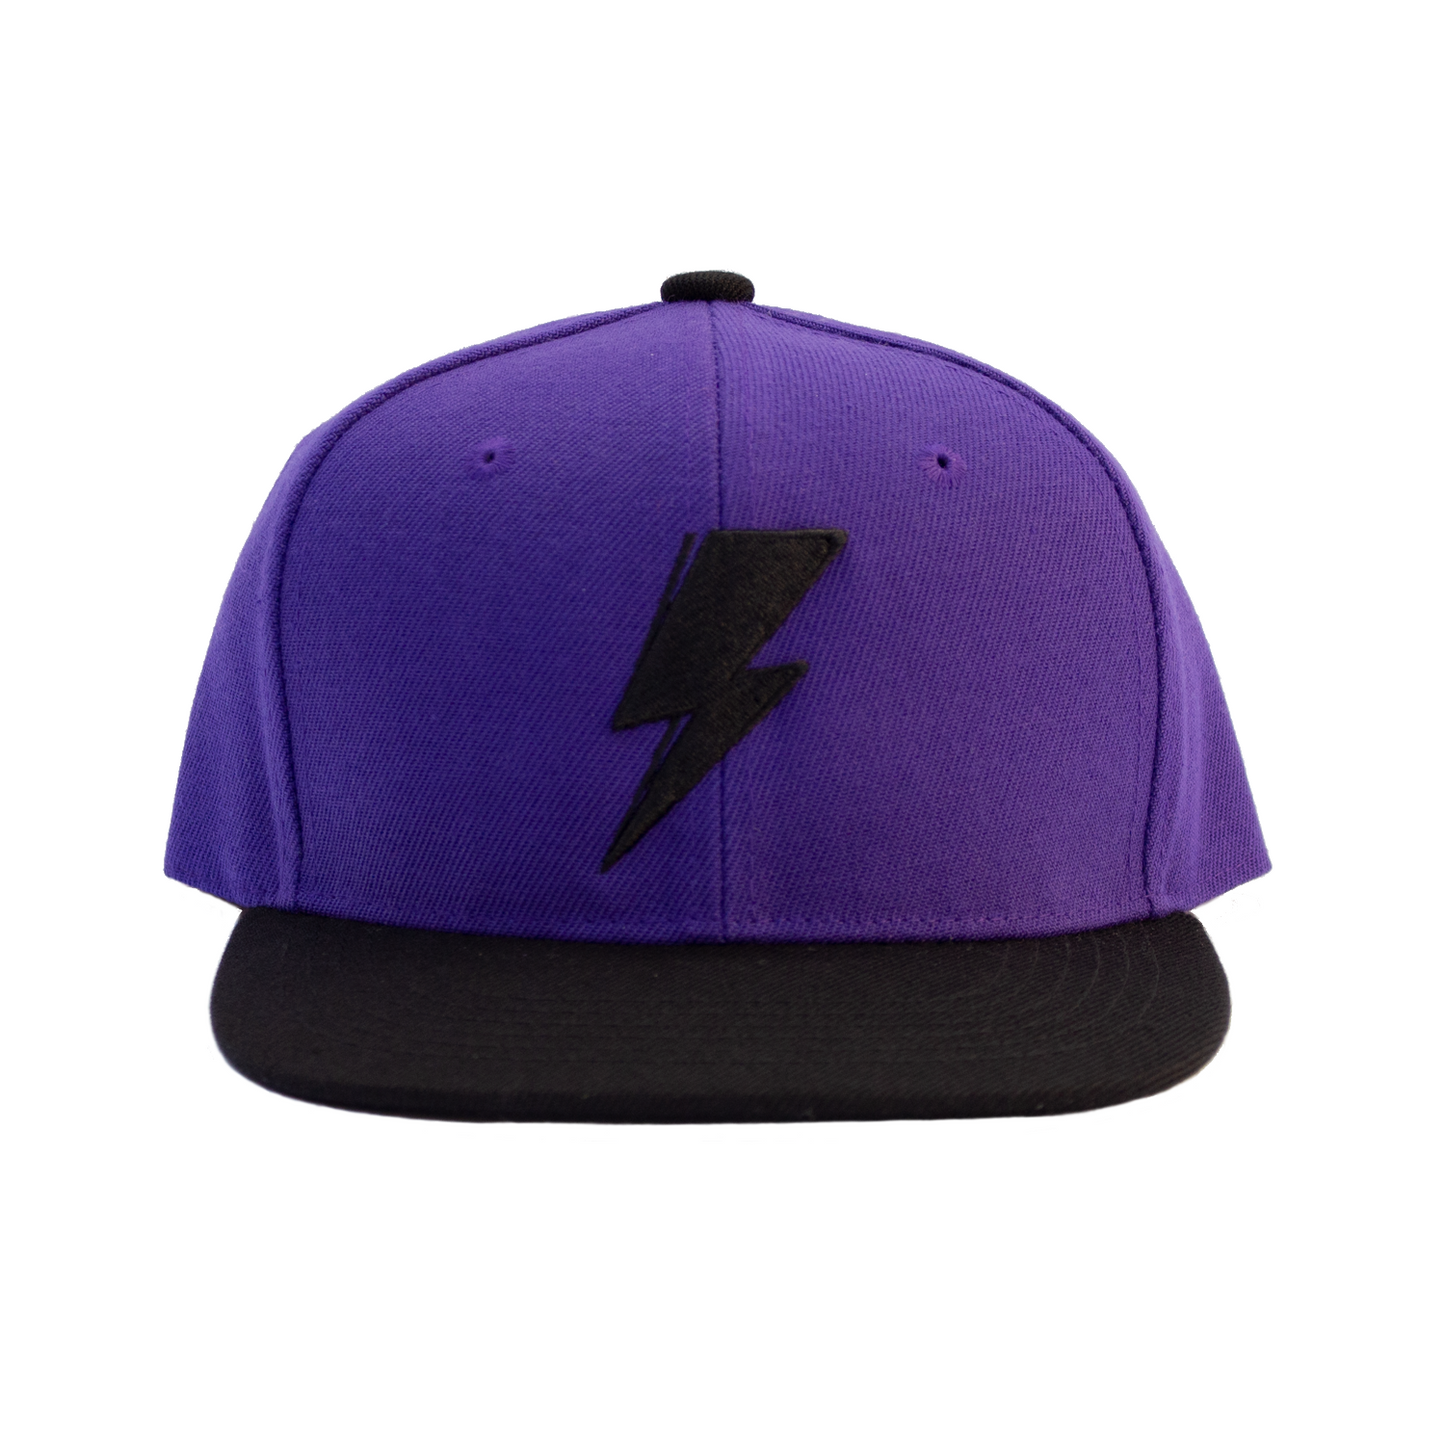 Svolta Youth Child Kids Boys Girls snapback hats 3D embroidered ightning bolt purple black